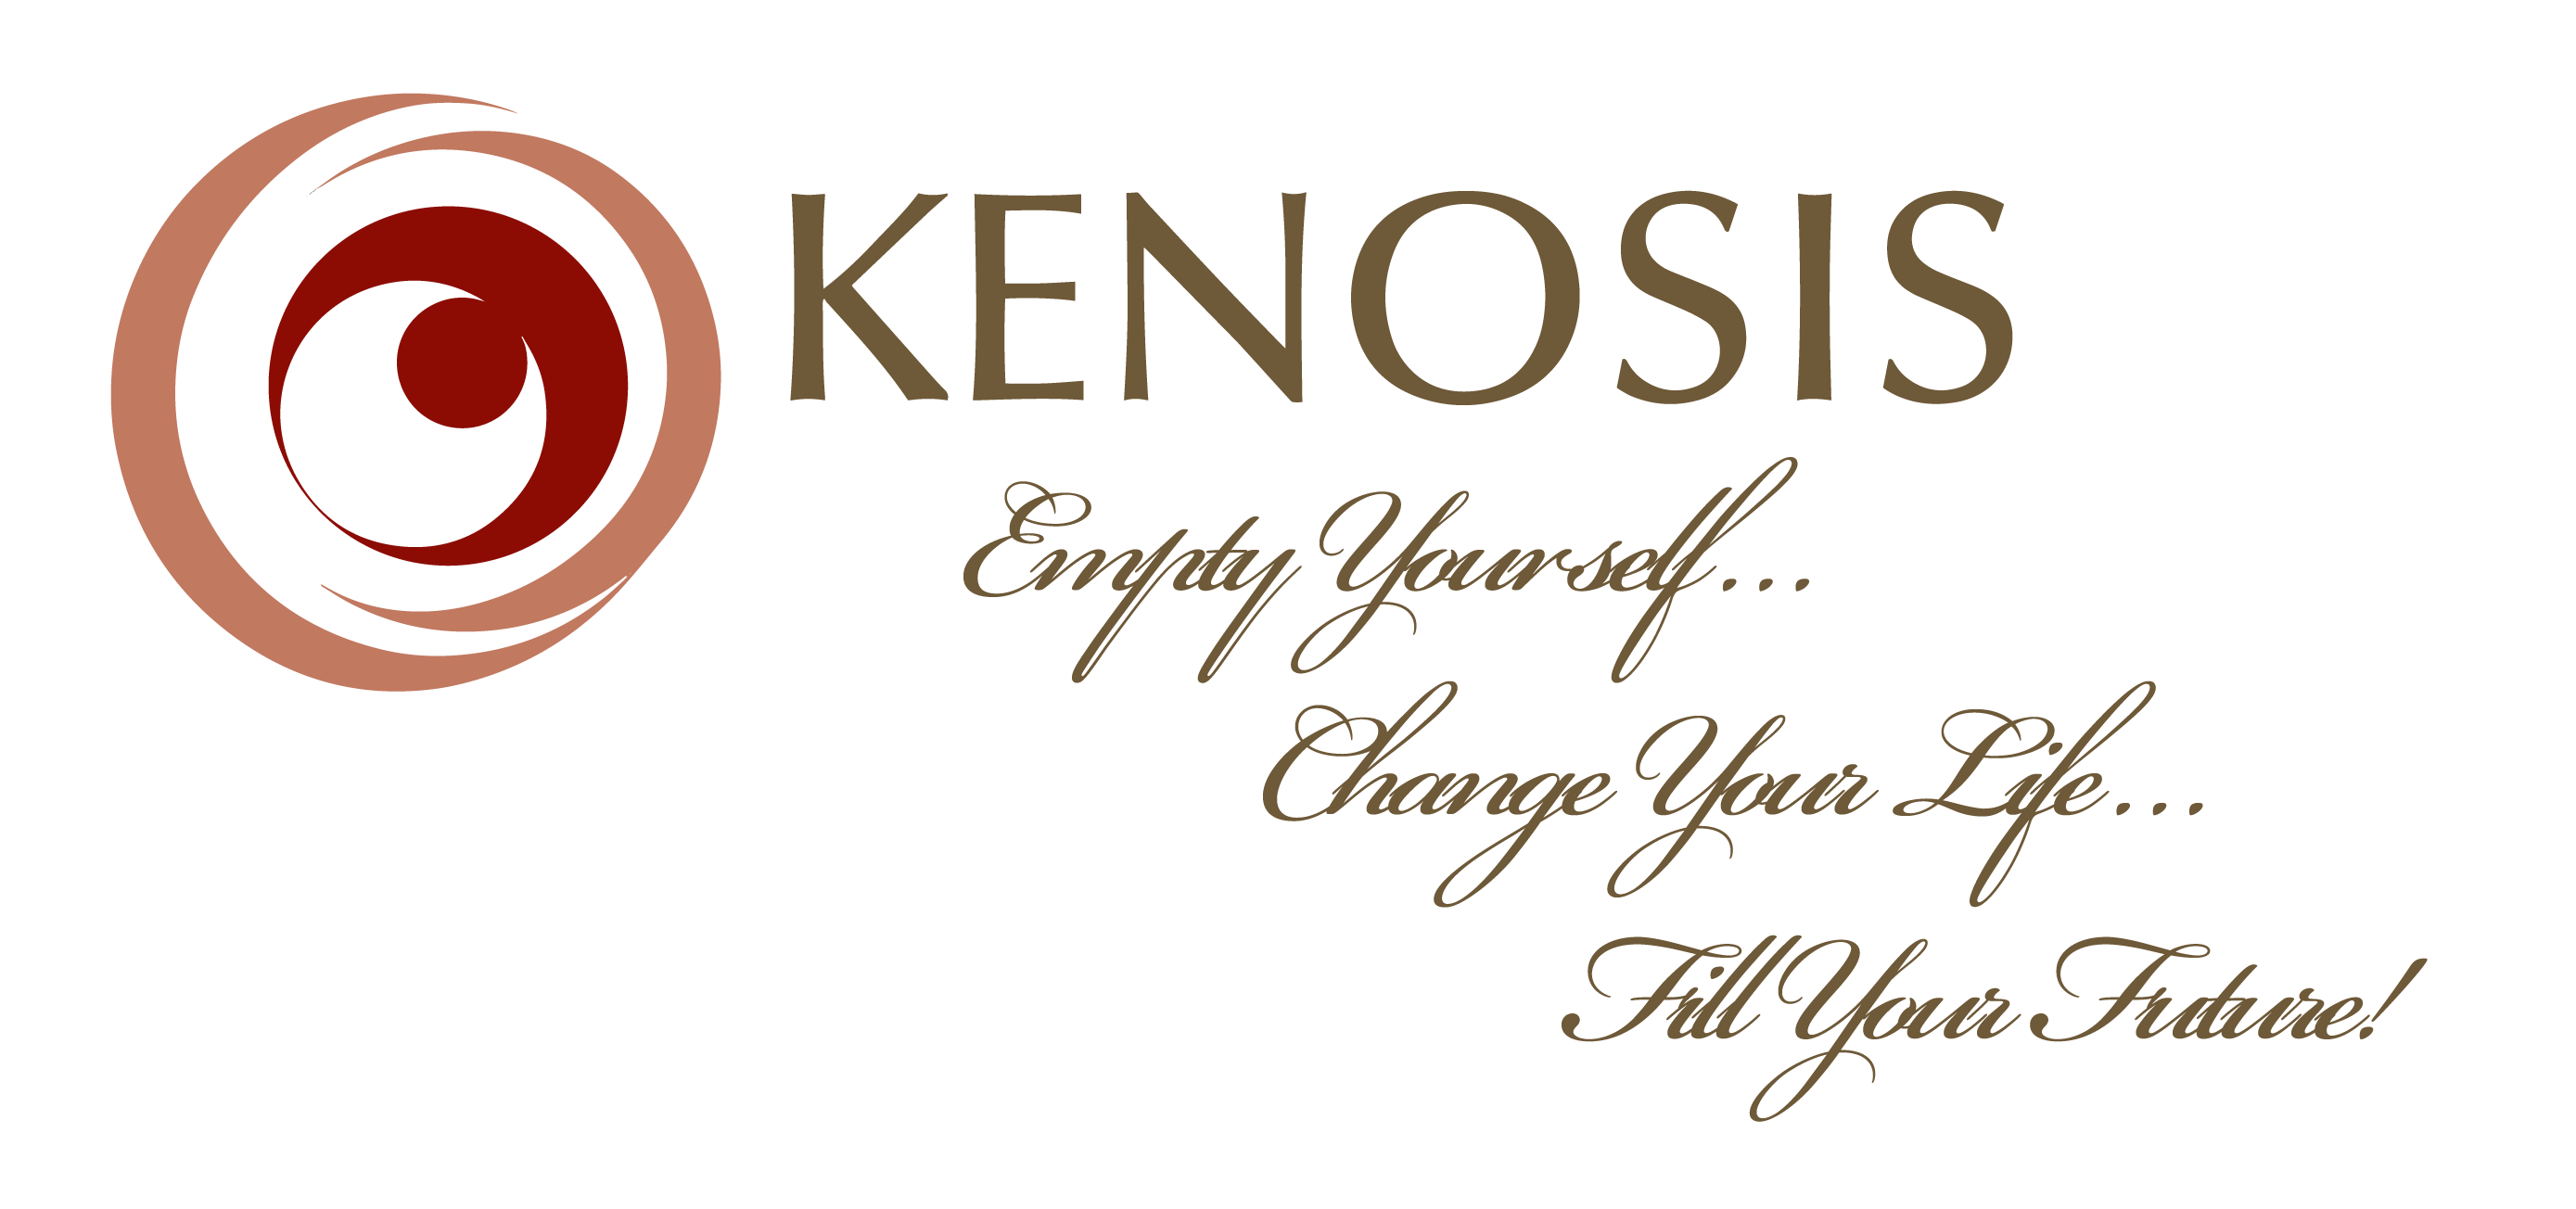 Kenosis Counseling Center